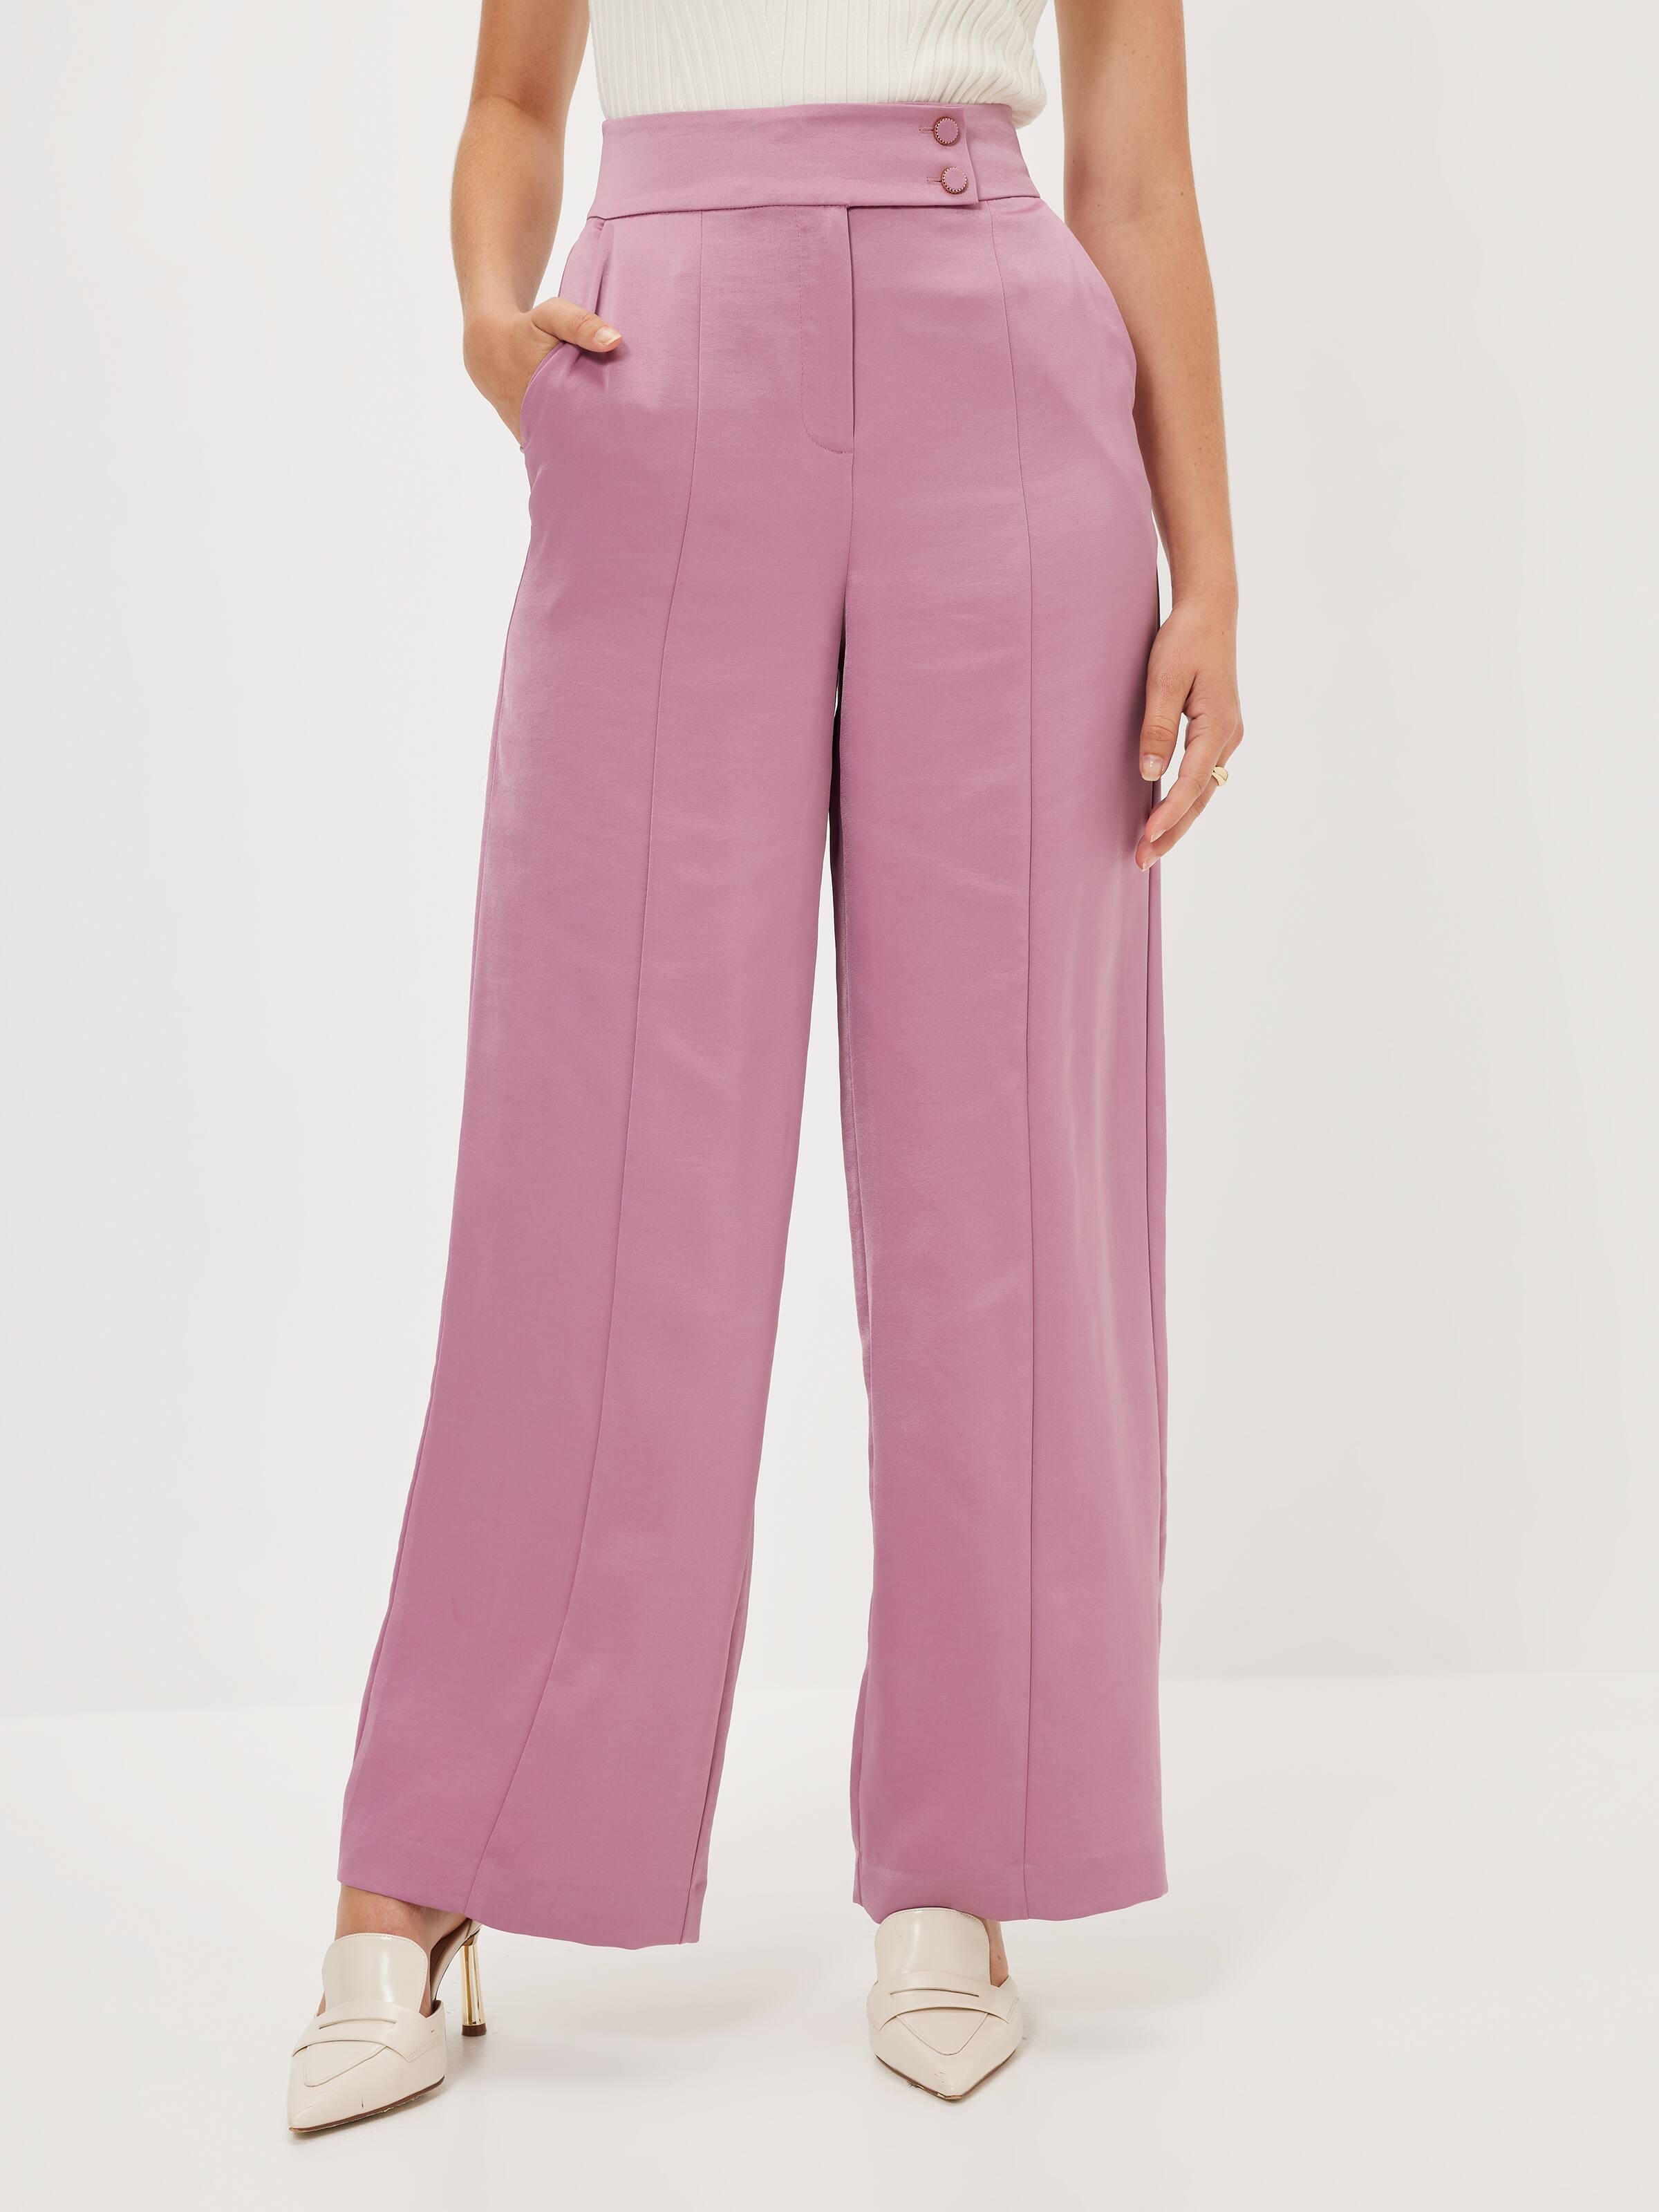 Make it Sophisticated Light Pink Wide-Leg Trouser Pants